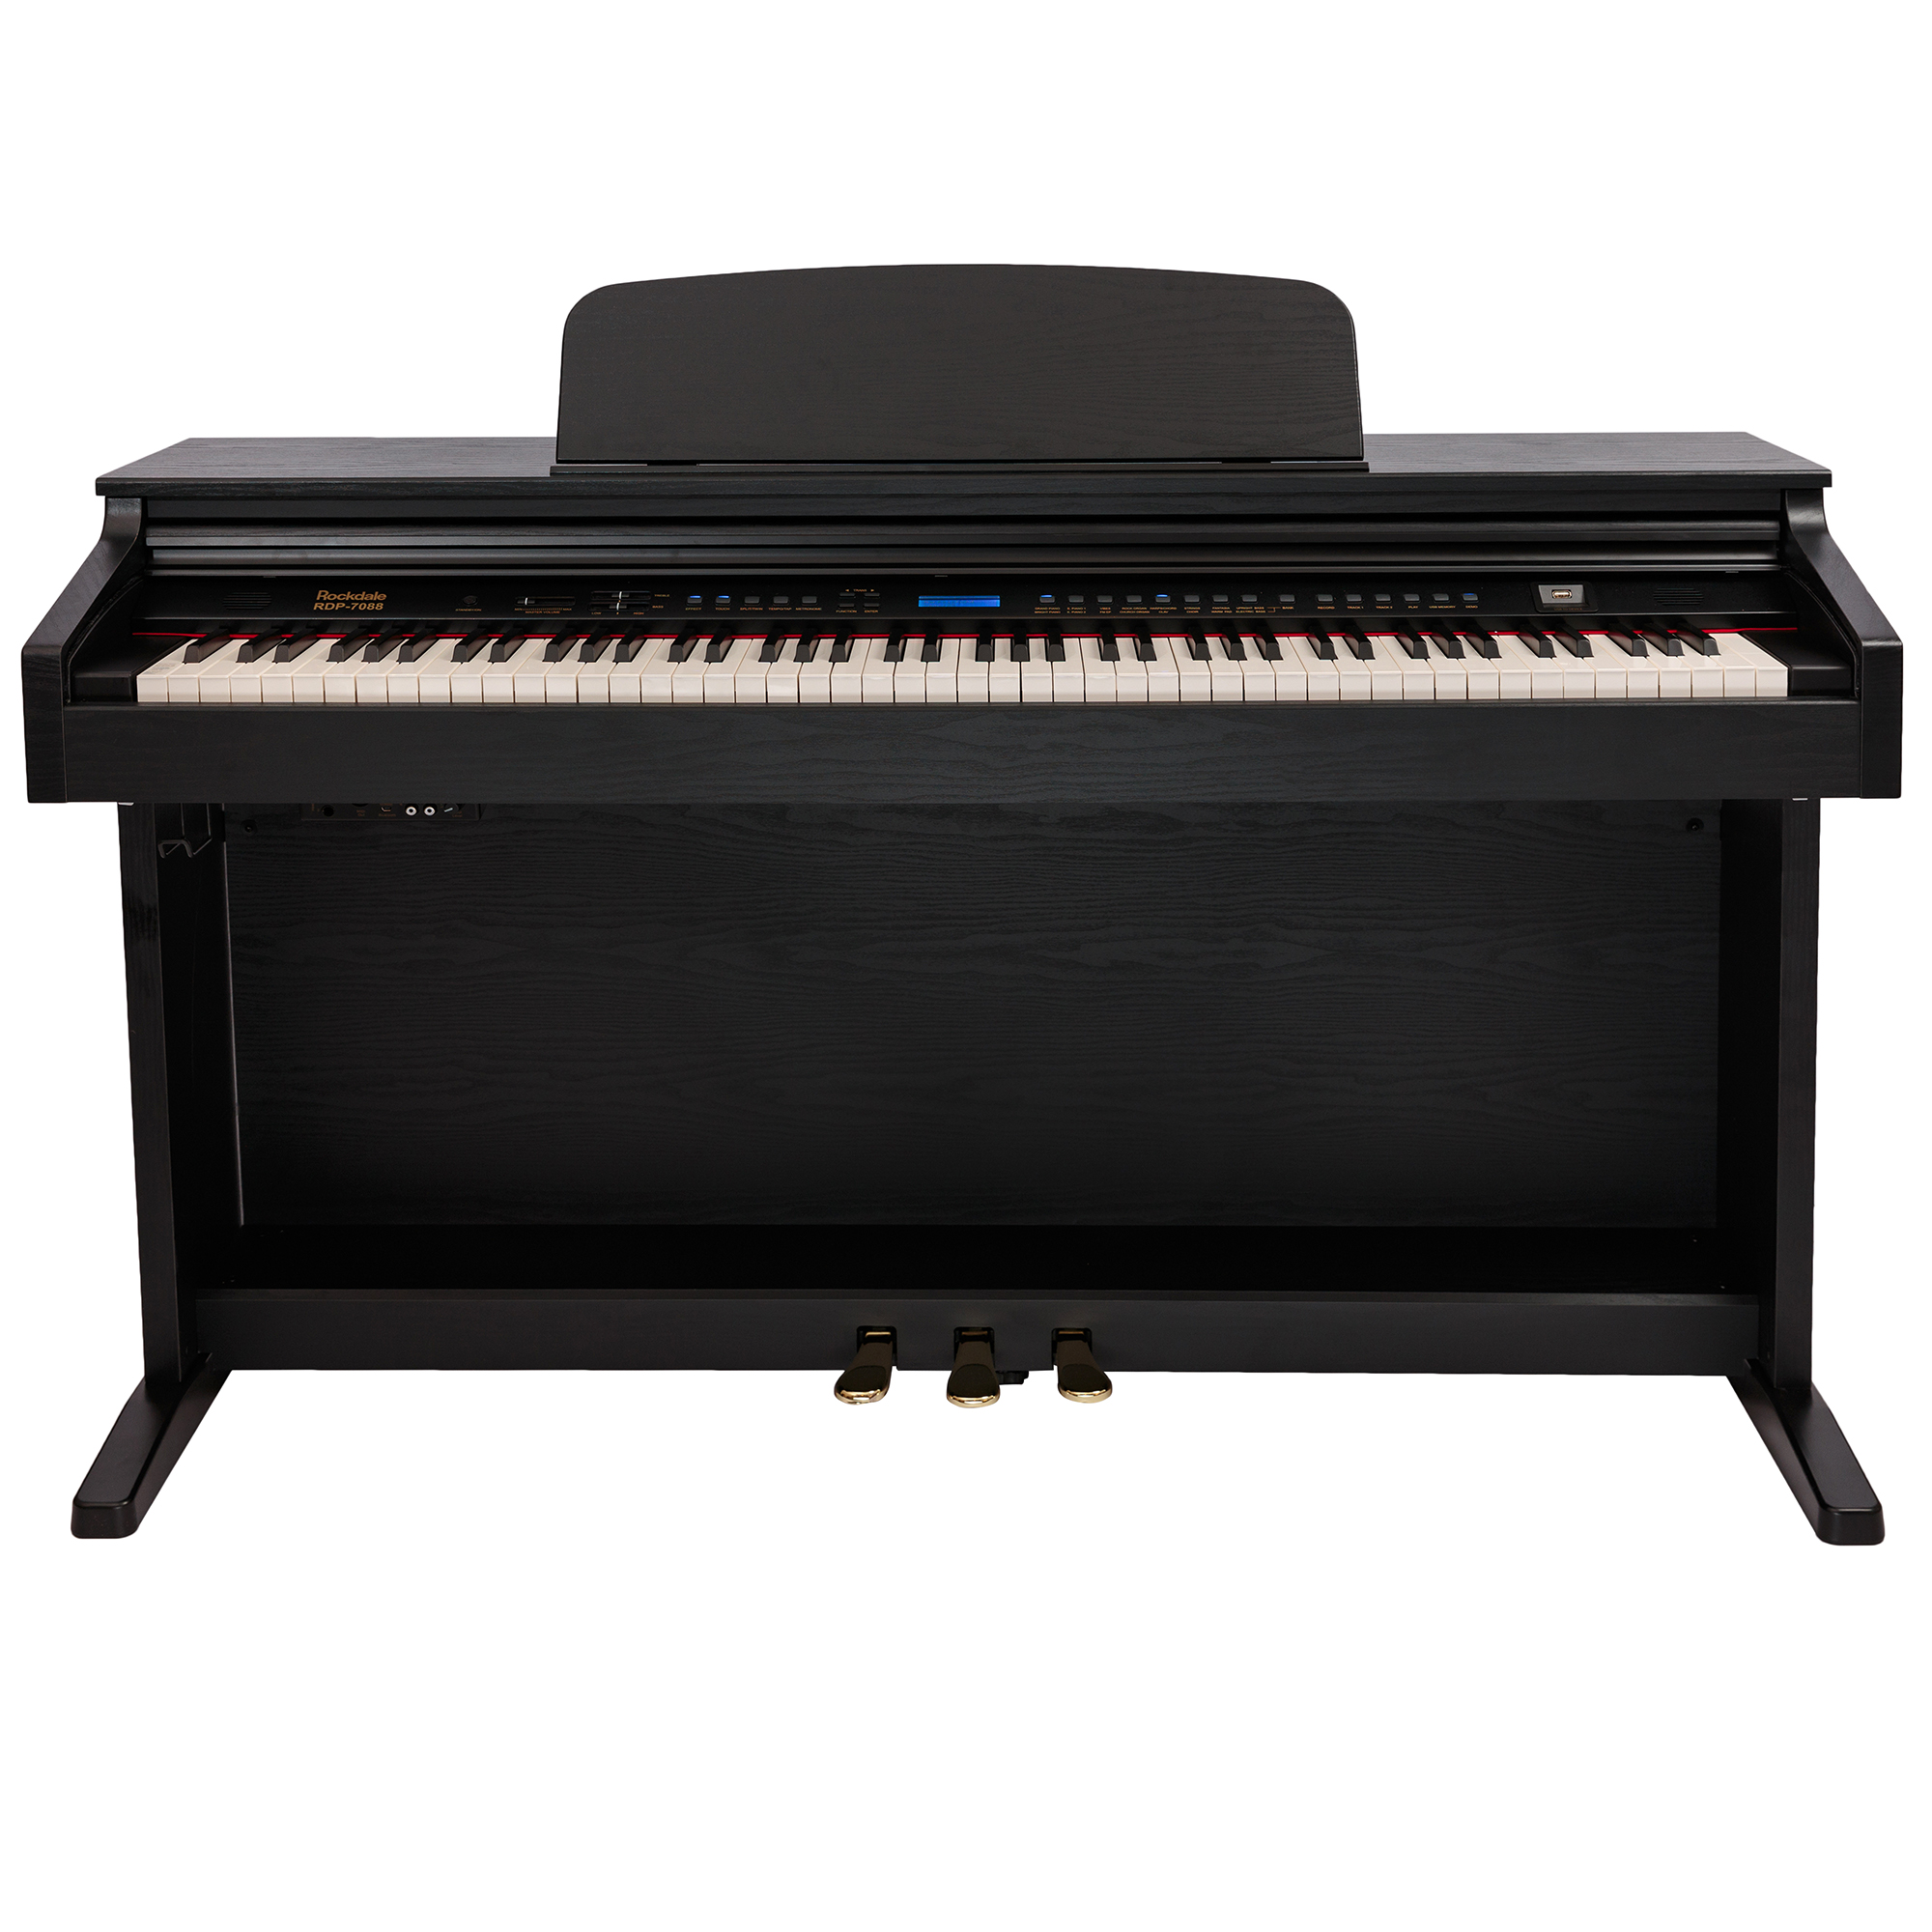 Цифровые пианино ROCKDALE Fantasia 128 Graded Black цифровые пианино rockdale etude 128 graded white